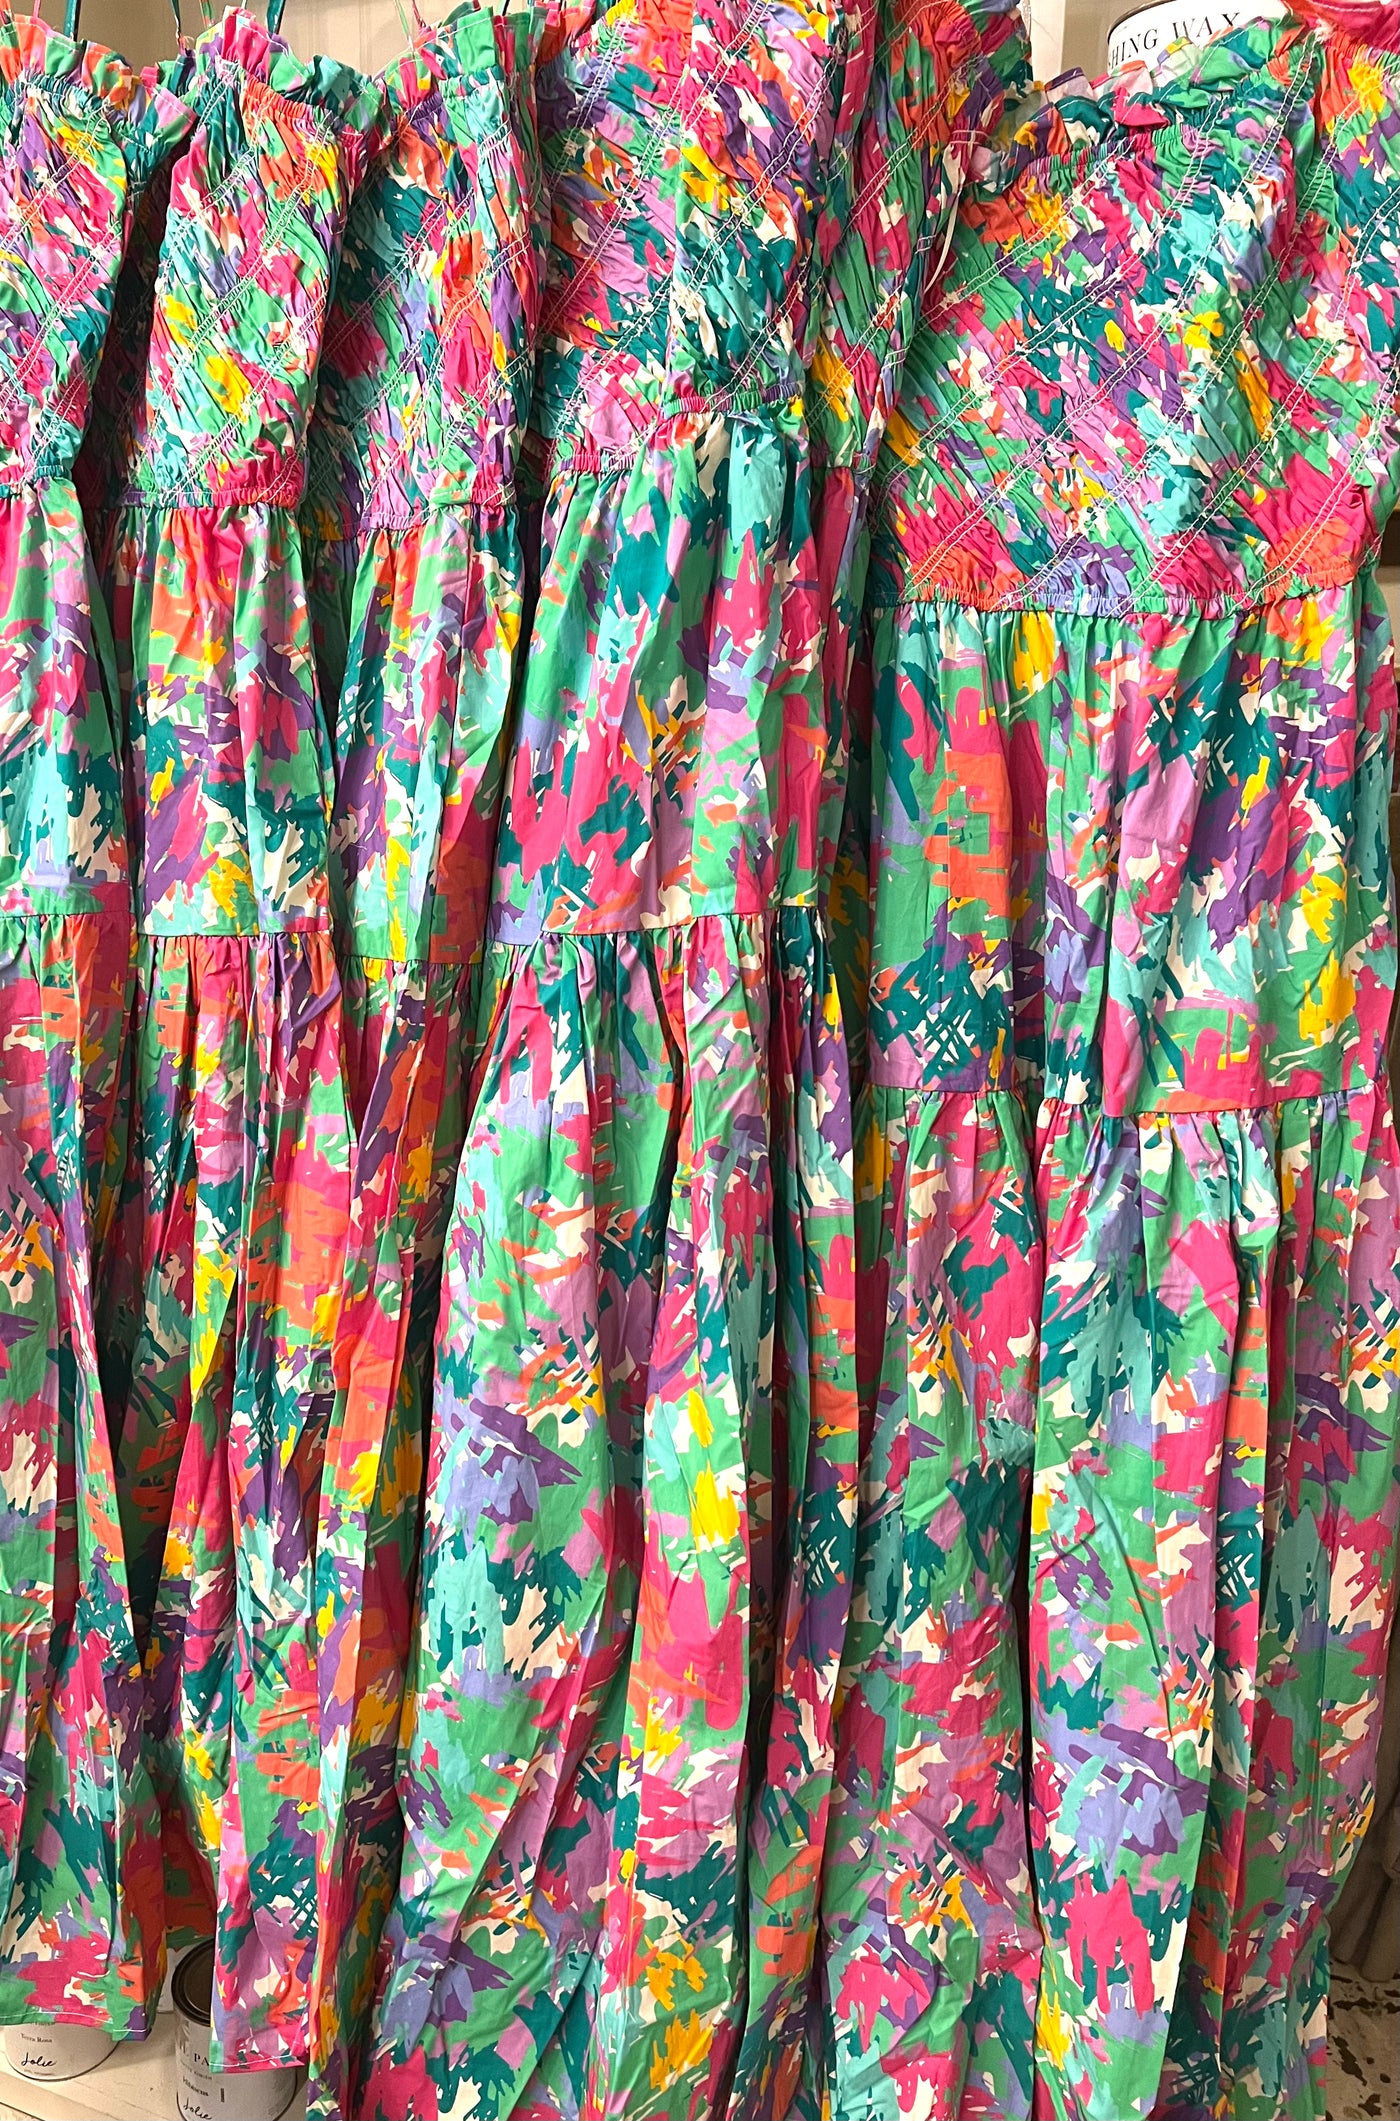 Floral Smocked Maxi Dress